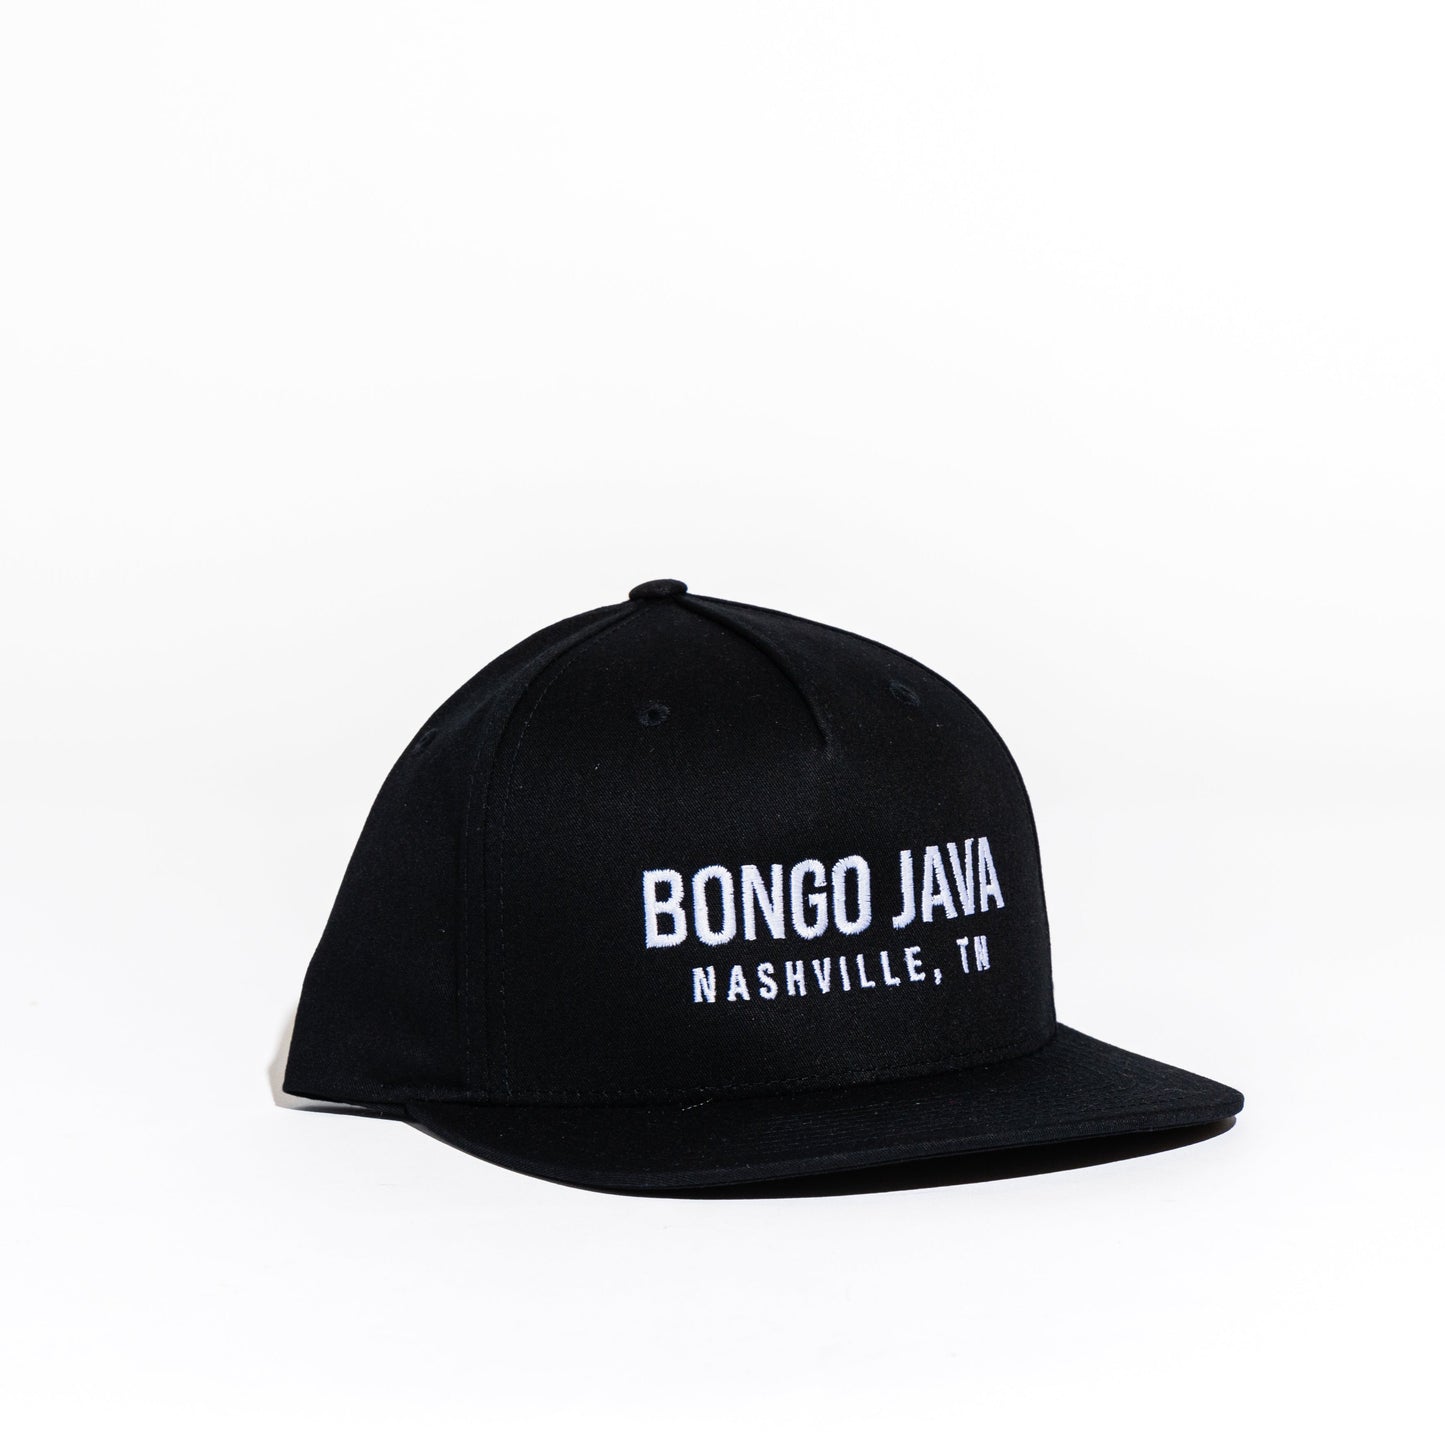 Bongo Java Hat